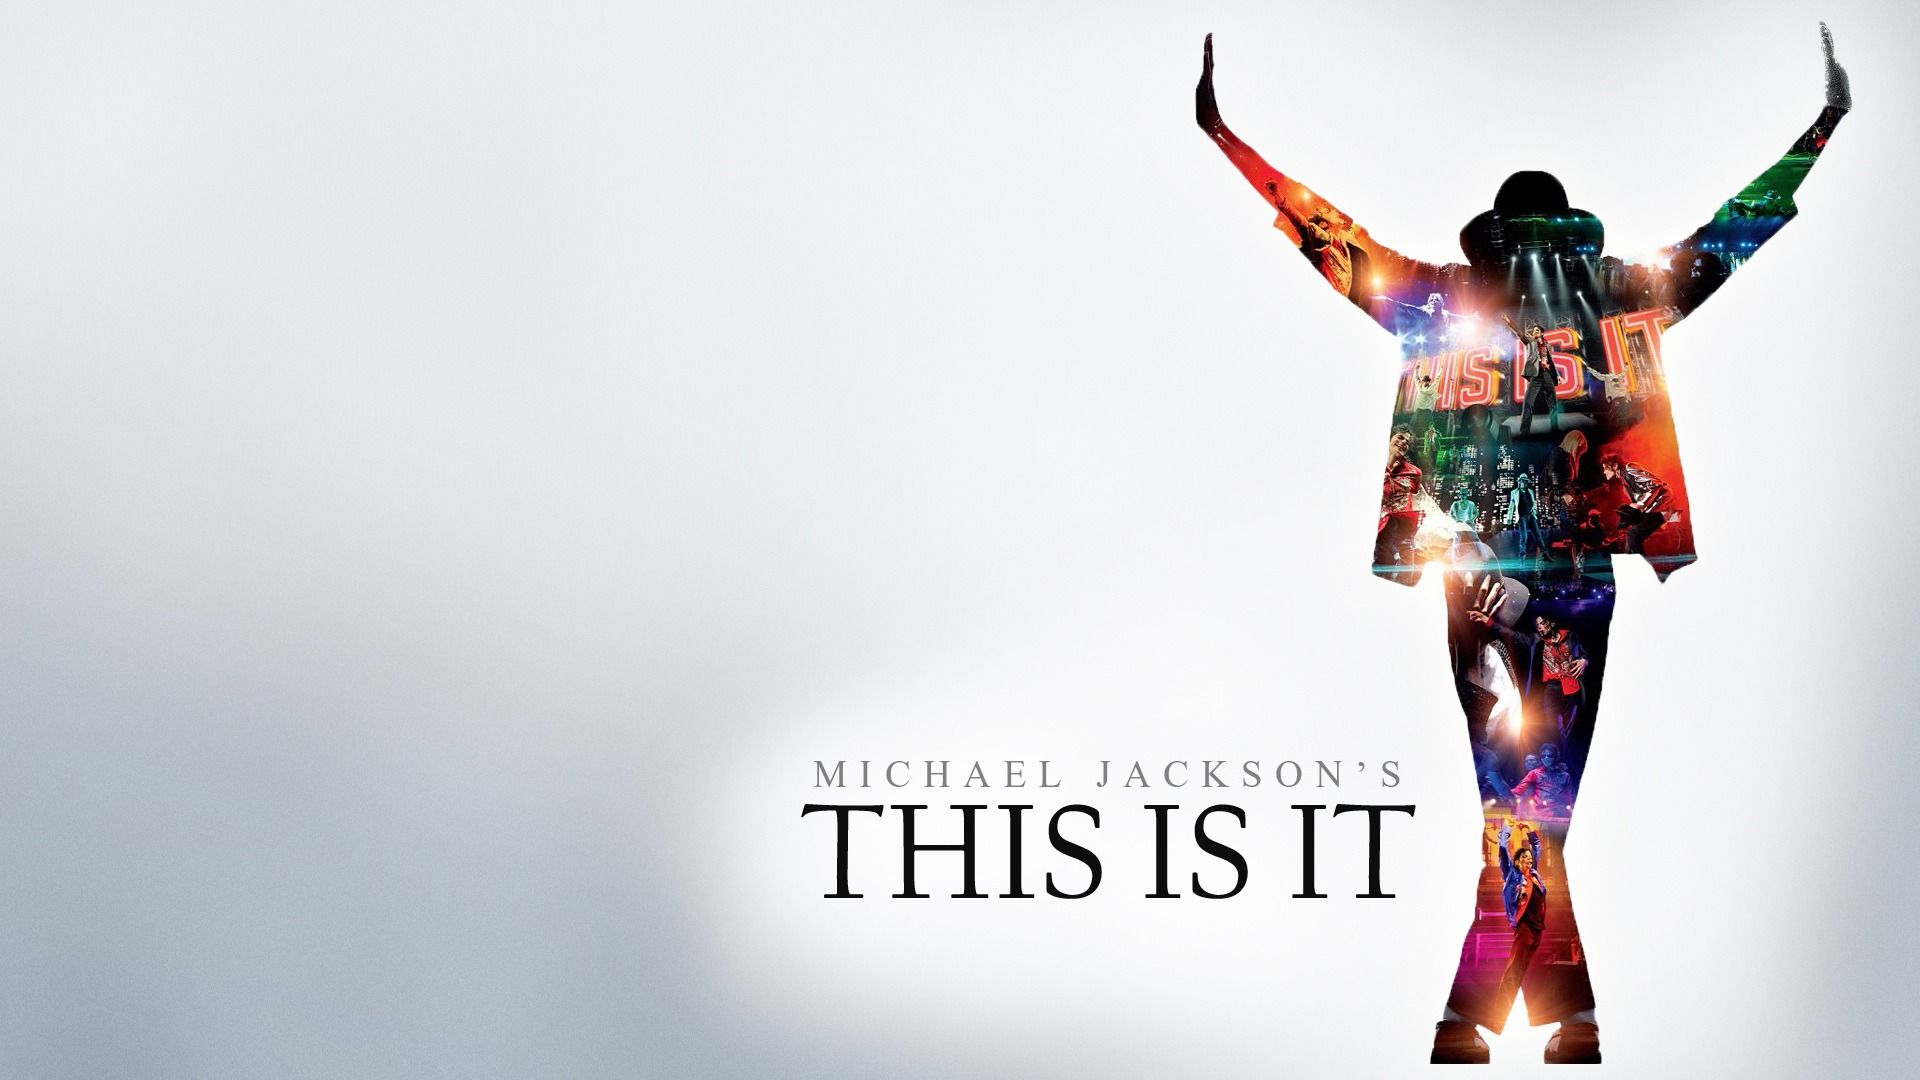 Michael Jackson Wallpaper HD Free Download. Michael jackson wallpaper, Michael jackson live, Michael jackson image